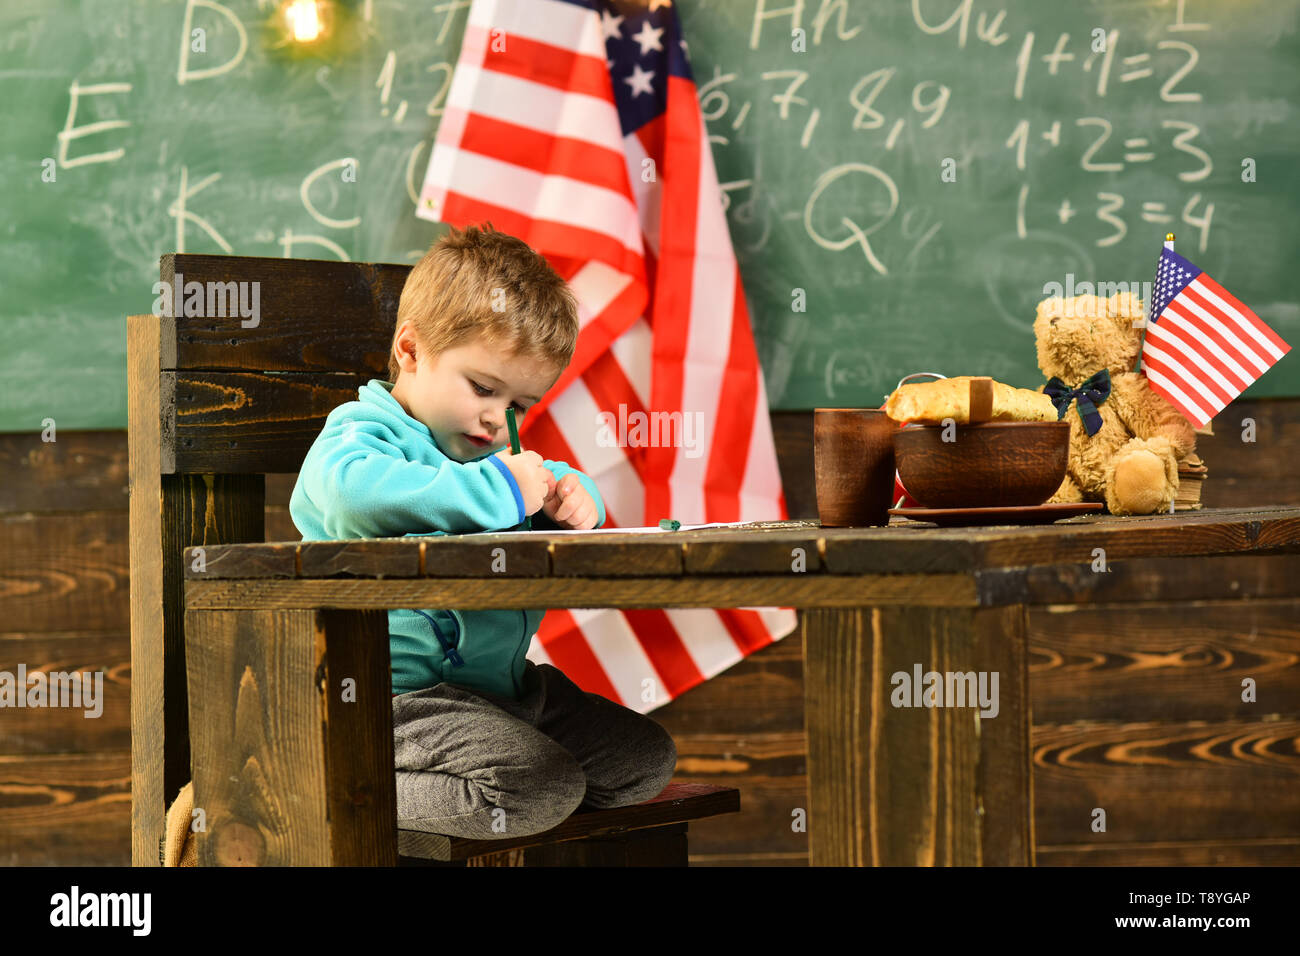 American preschool student drawing or writing near USA flag. Stock Photo